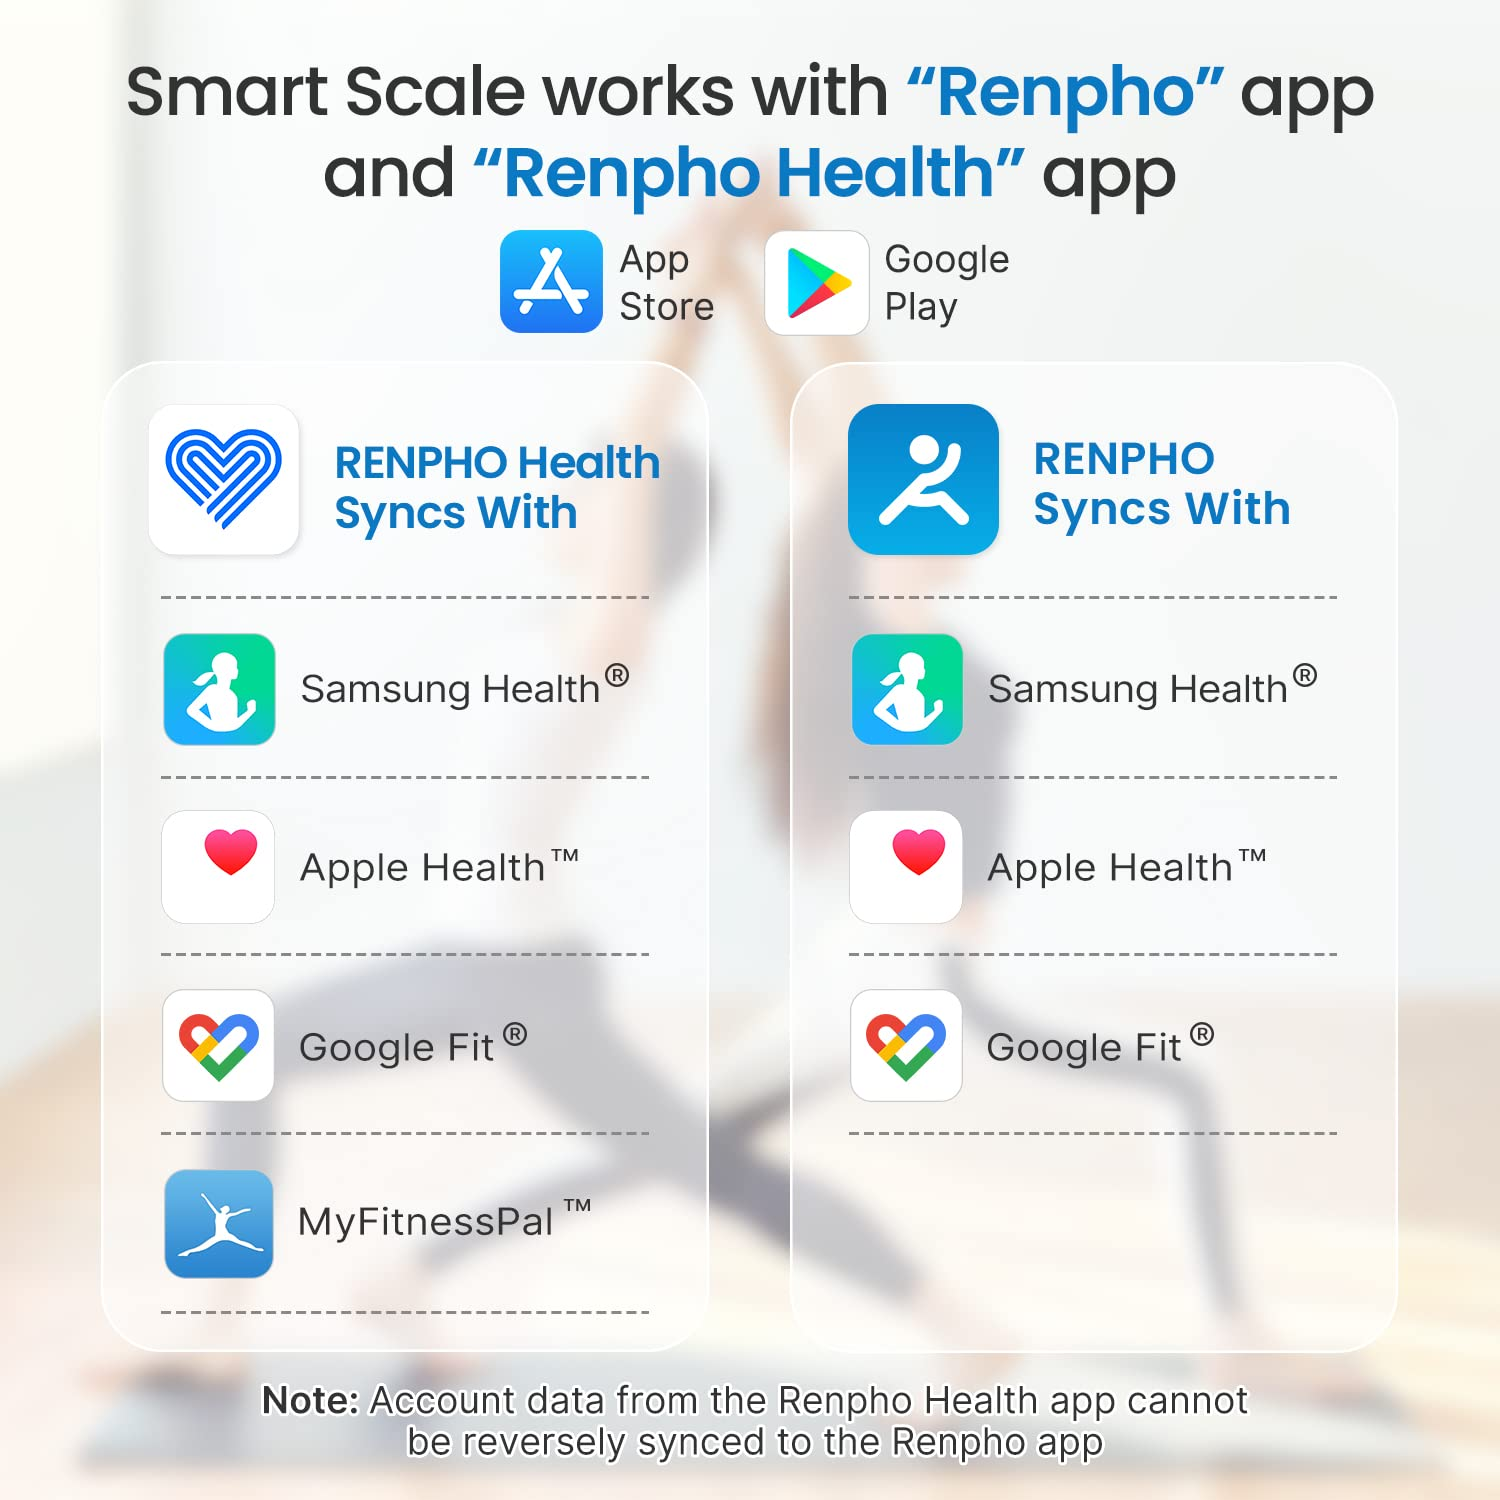 mit Körperfettwaage Körperanalysewaagen App Personenwaage RENPHO Bluetooth